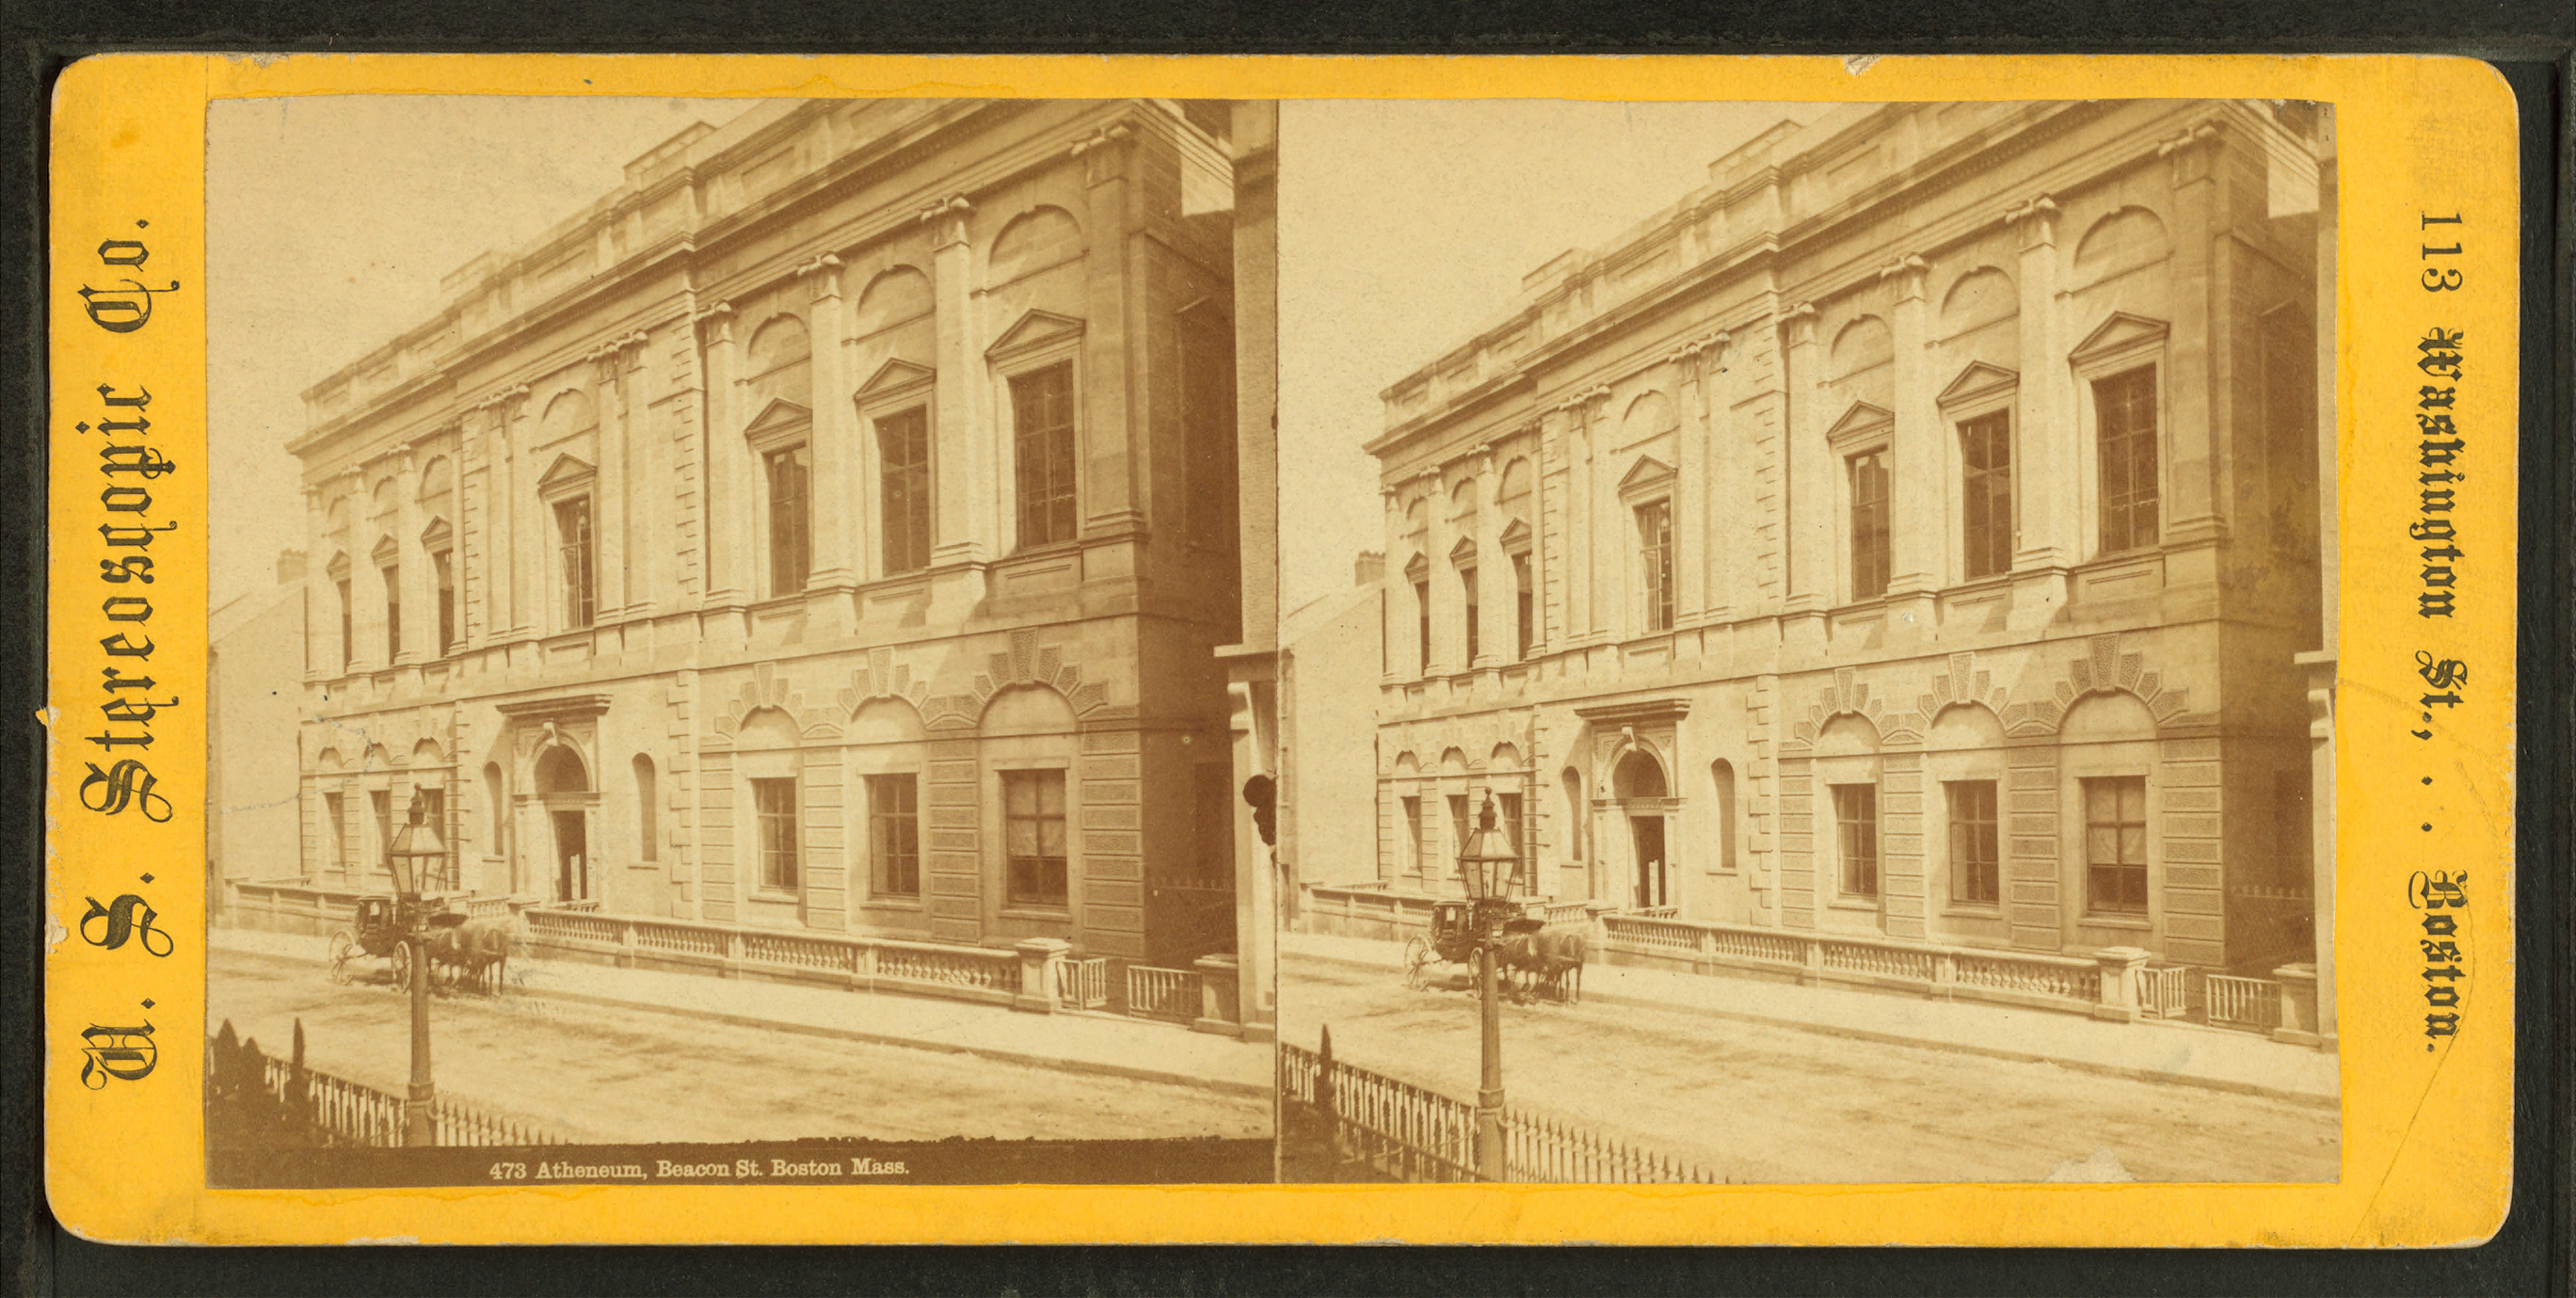 Atheneum, Beacon St., Boston, Mass, by U.S. Stereoscopic Co.